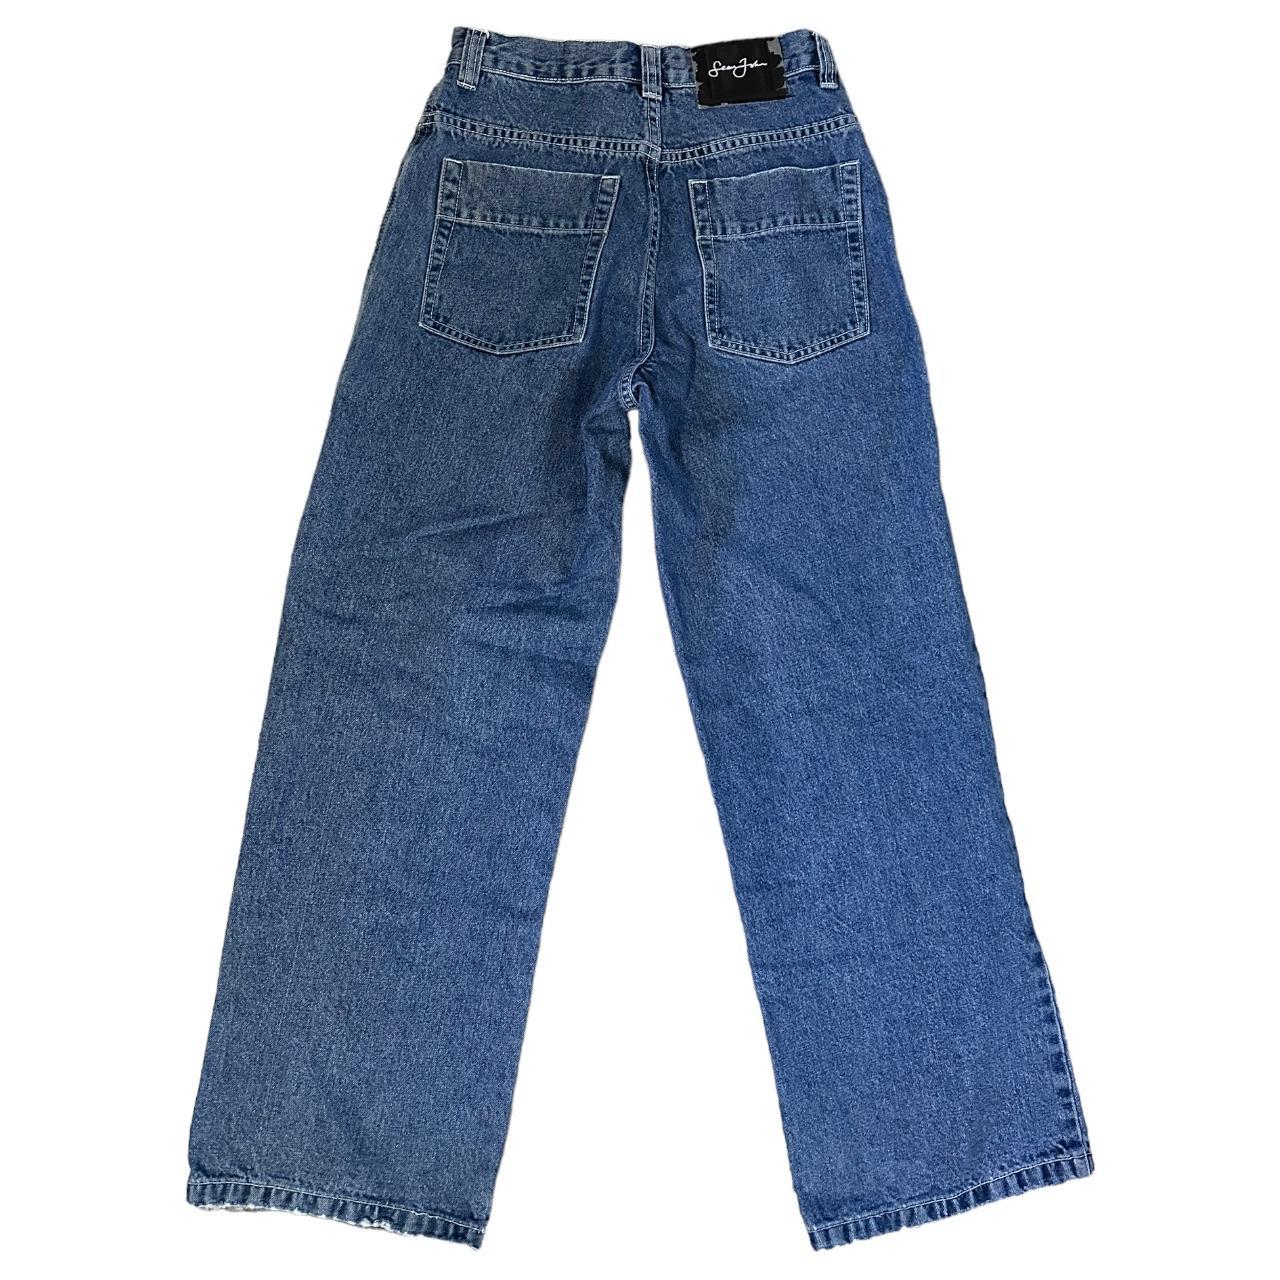 Sean John Baggy Jeans - Size Kids 14 (can fit xs/... - Depop